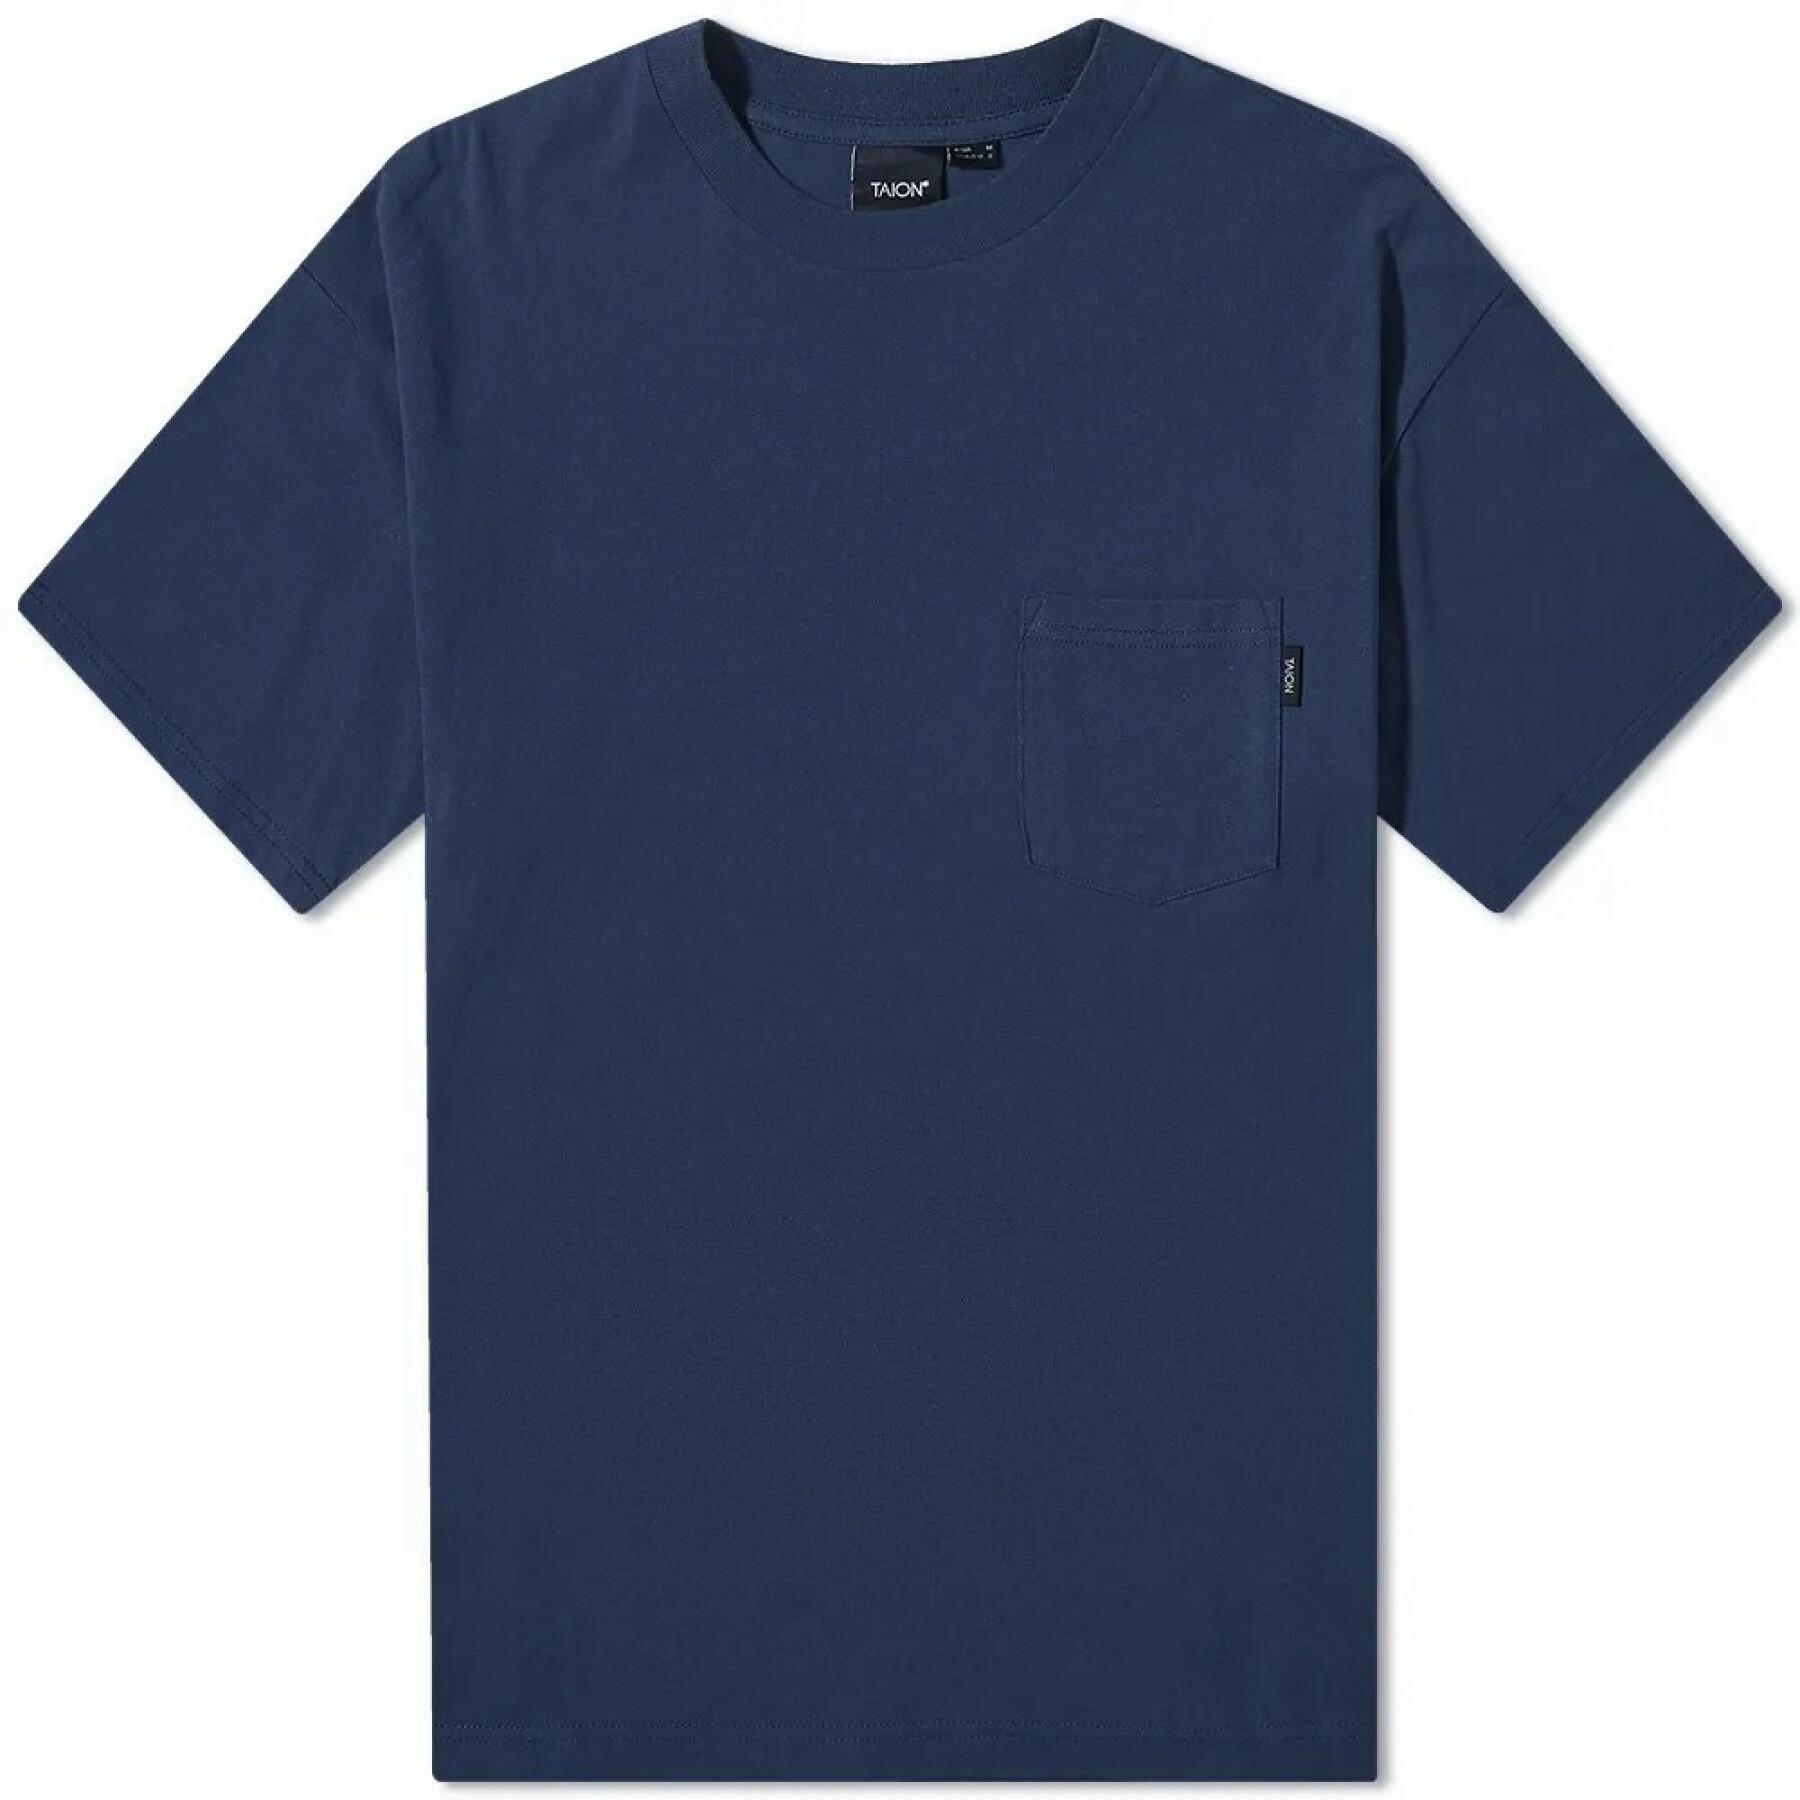 T-Shirt Taion